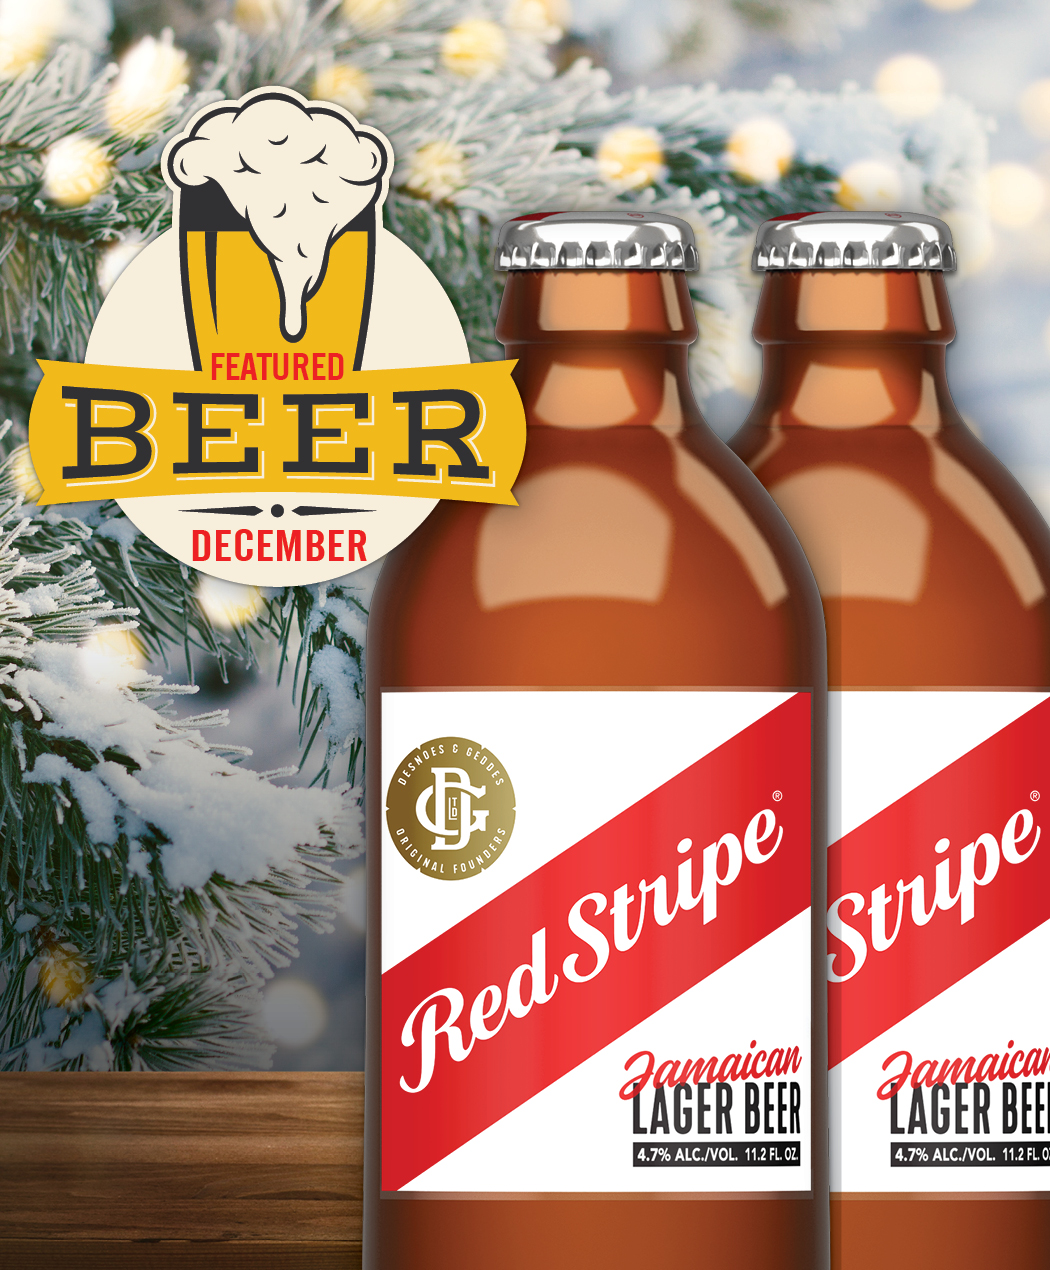 featured beer december Red Stripe Jamaican Lager Beer